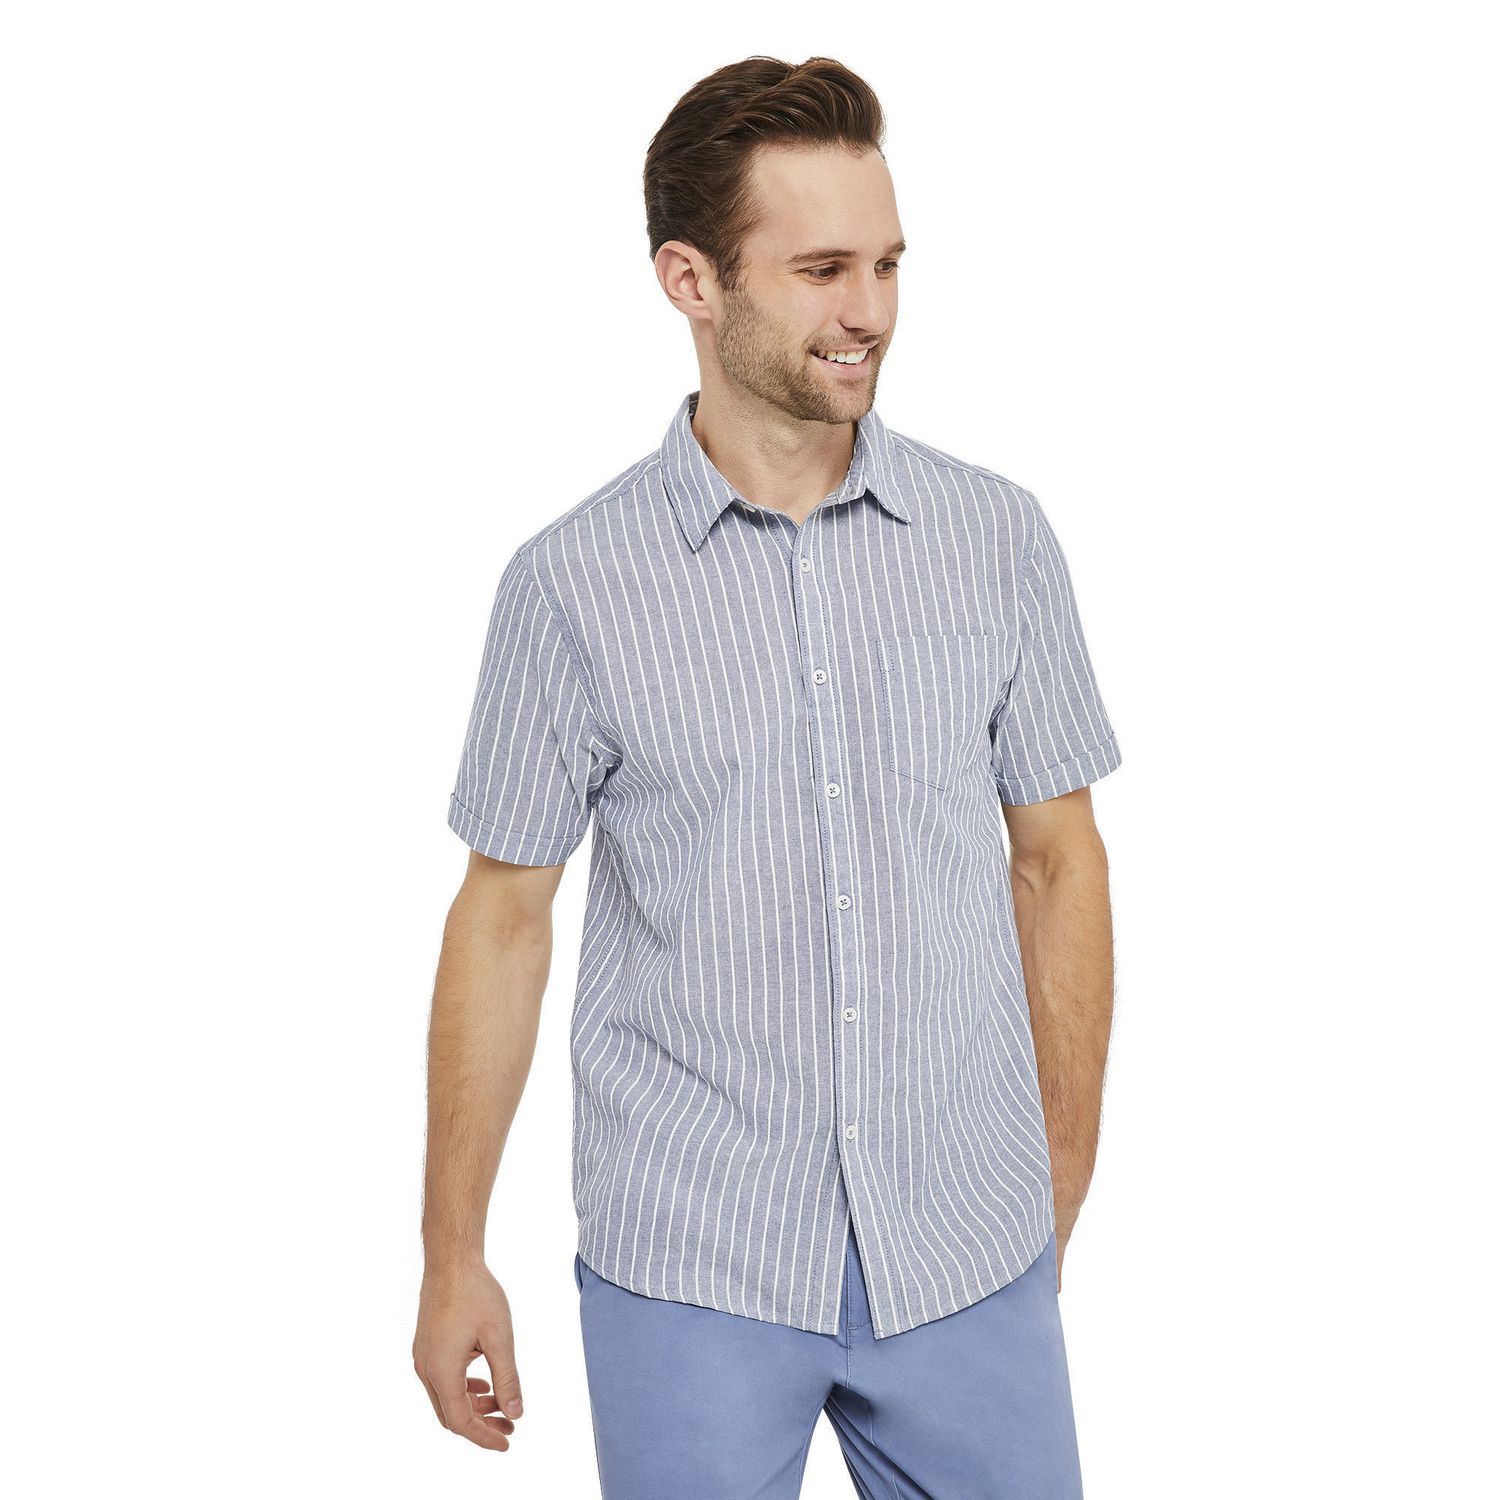 George Men's Linen Look Striped Shirt | Walmart Canada